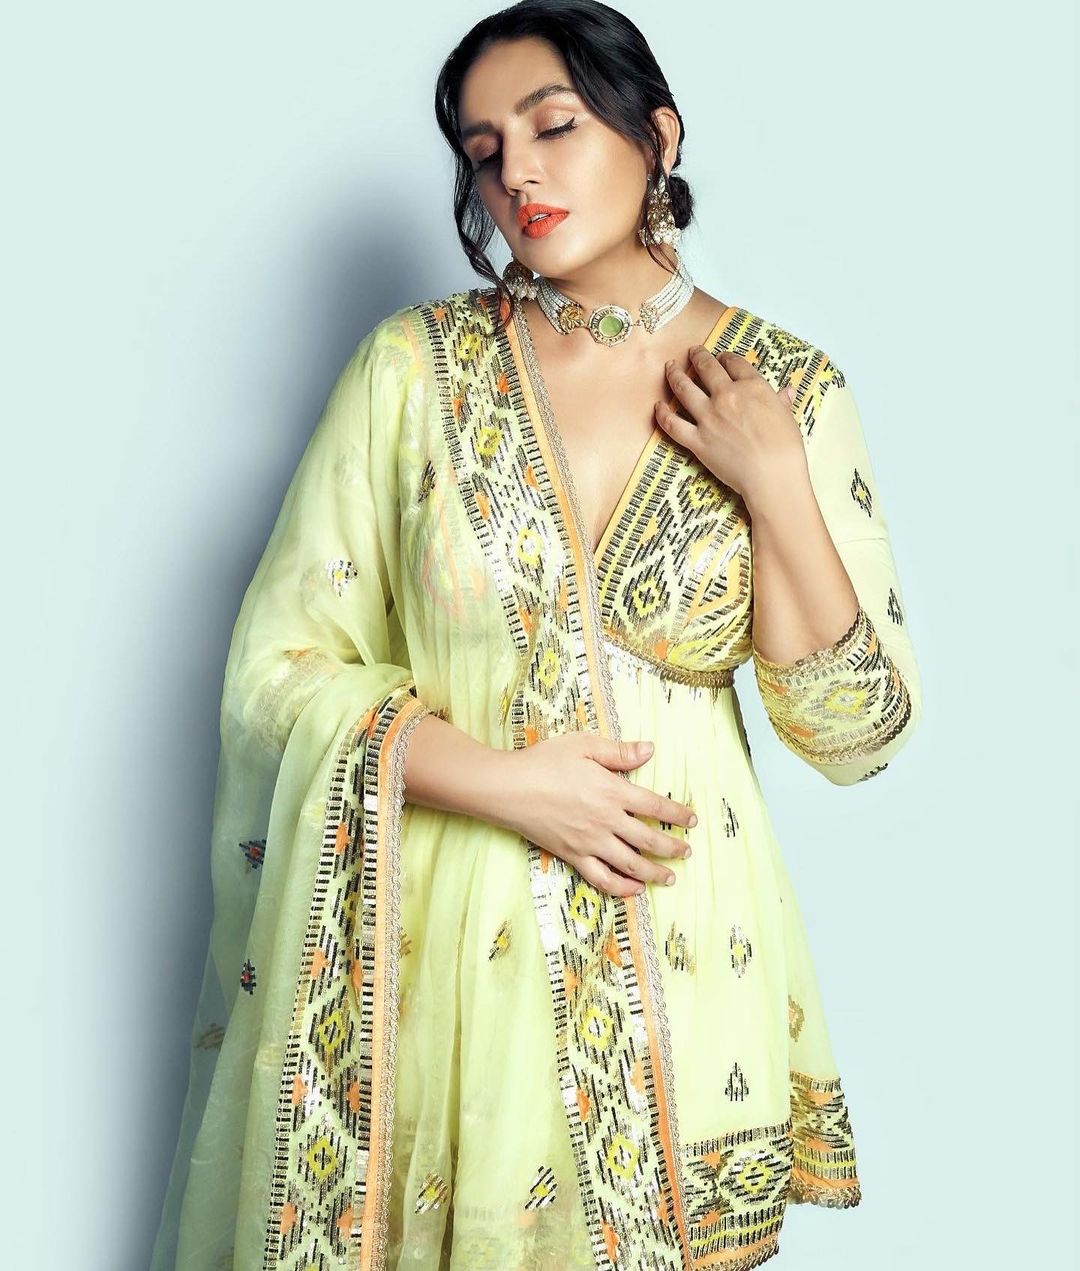 Huma Qureshi looks regal in the embellished kurta.